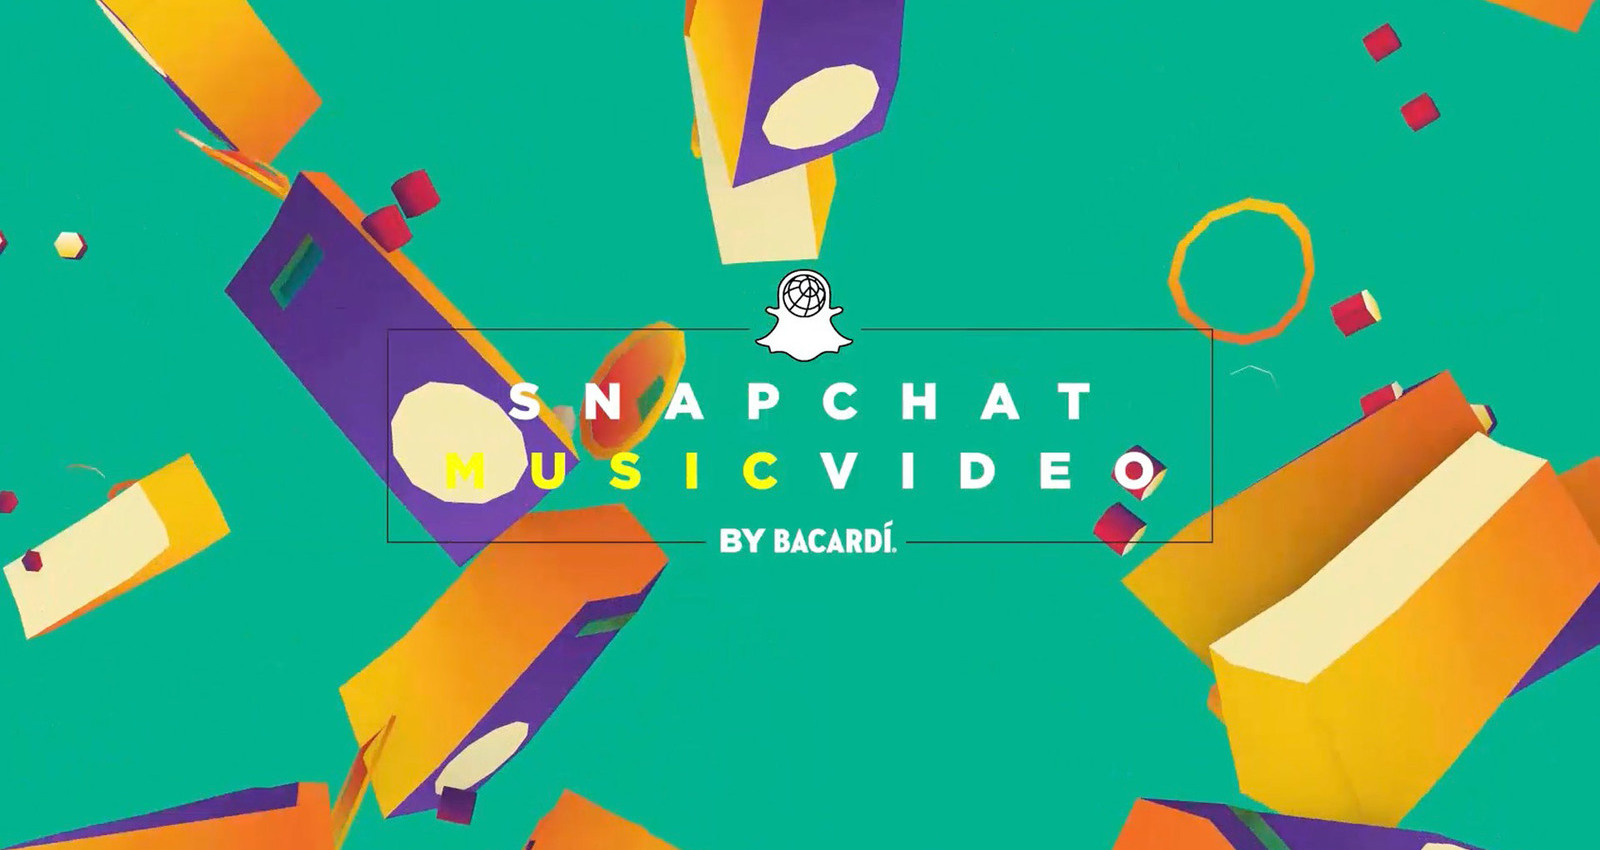 Snapchat Music Video